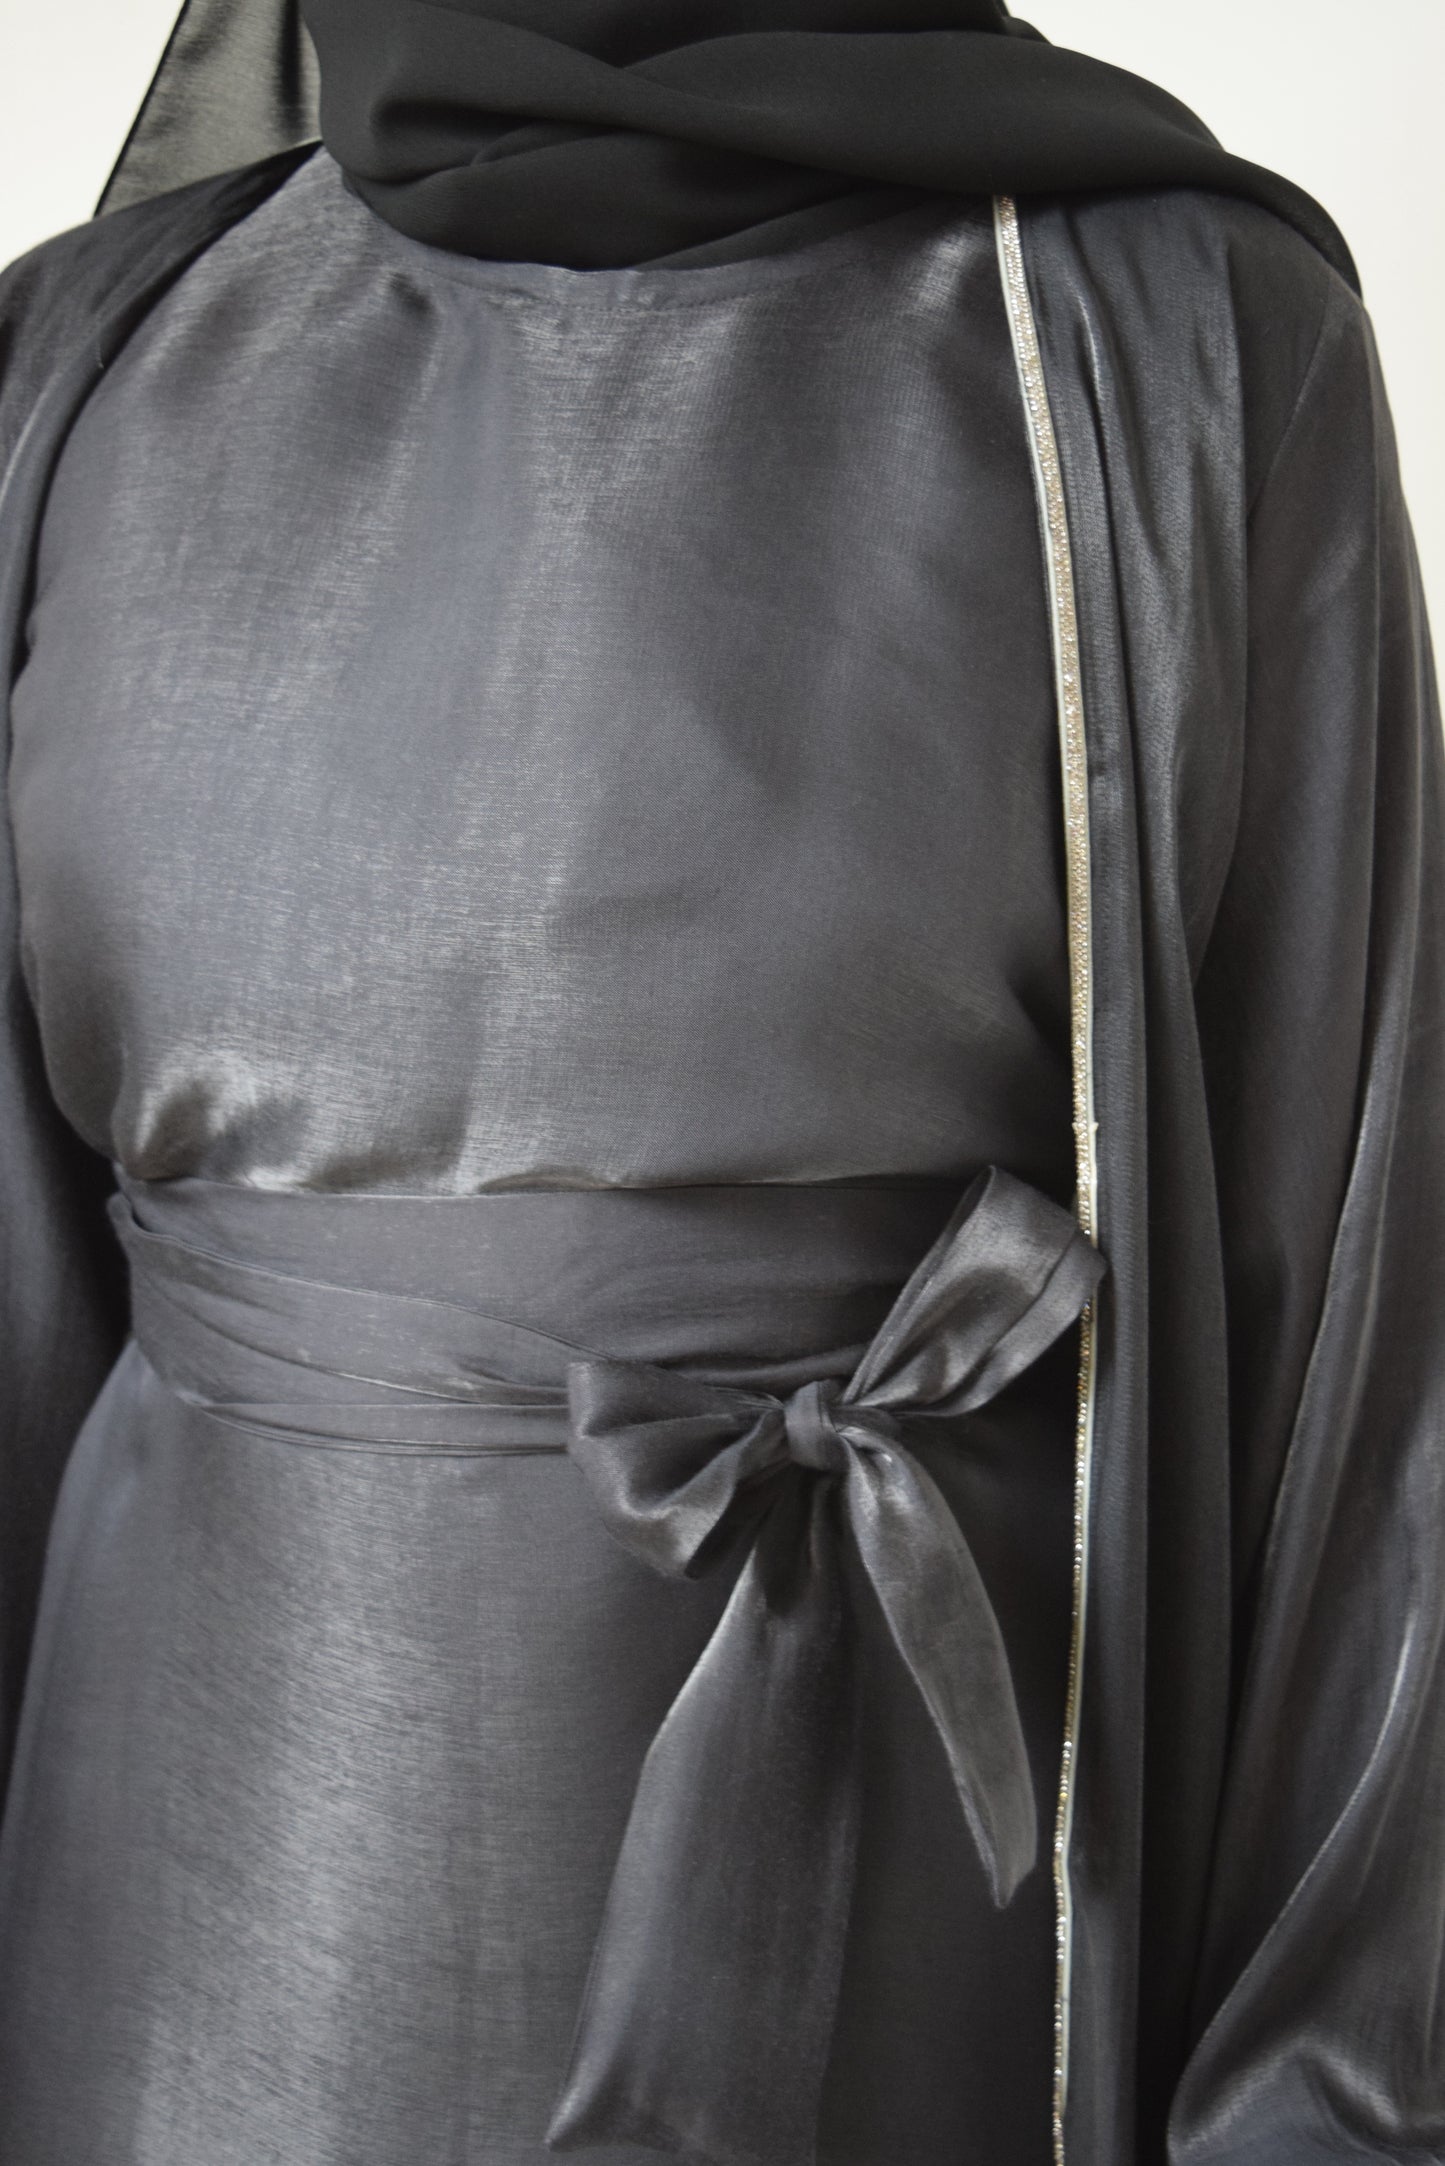 Malak Twin abaya set in shimmer Black and Silver trim